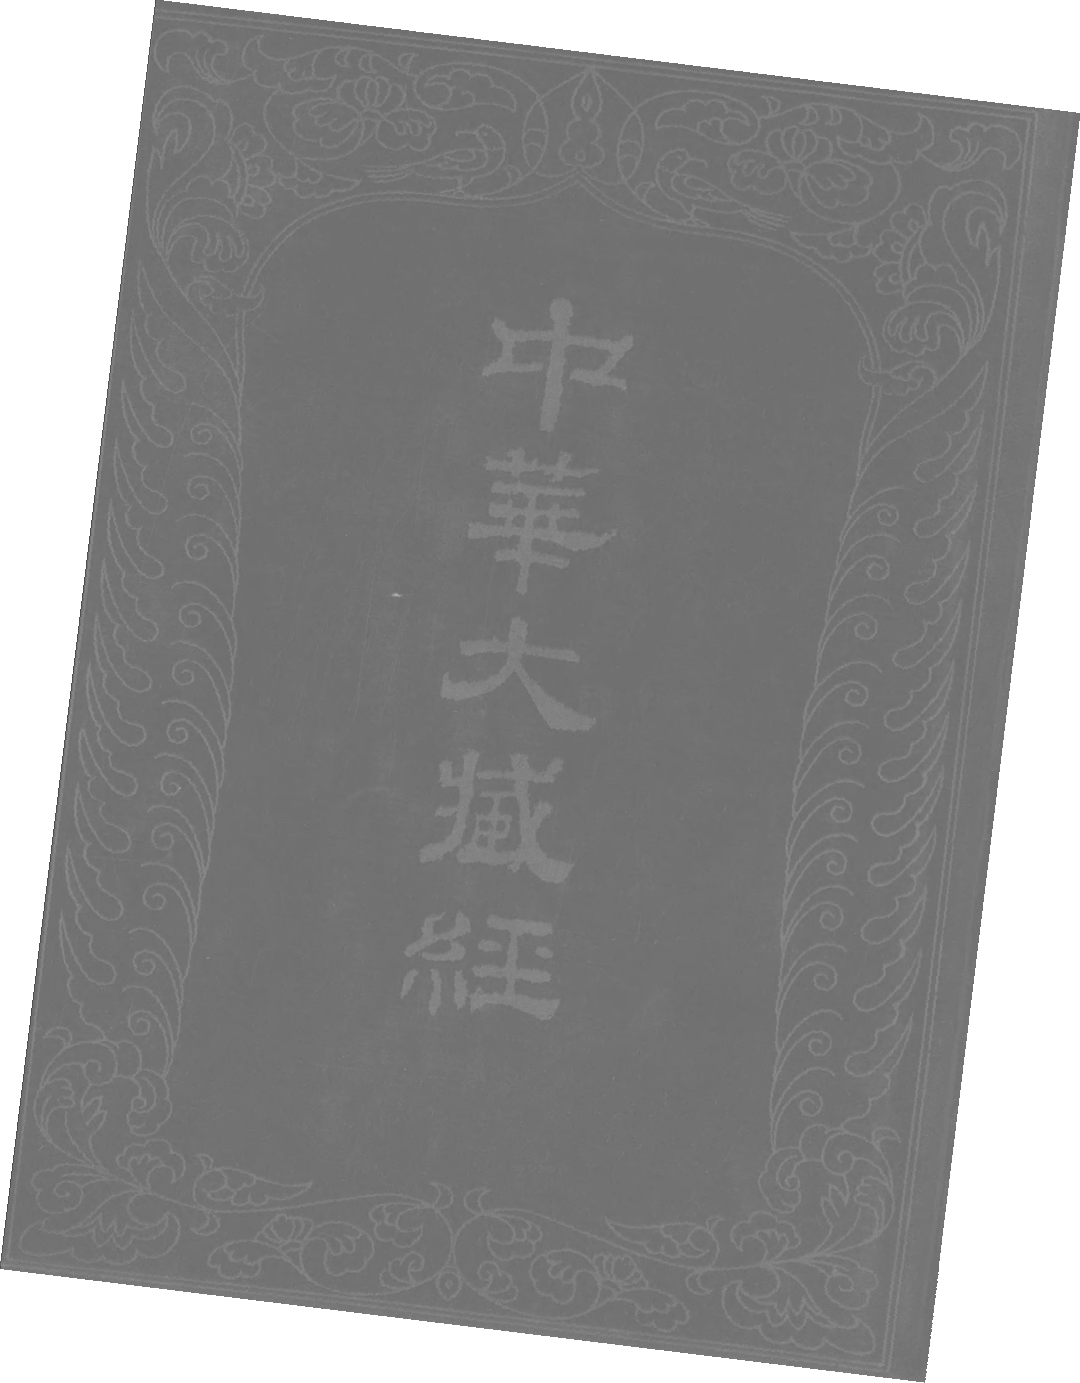 File:《中華大藏經》 第20冊 封面.png